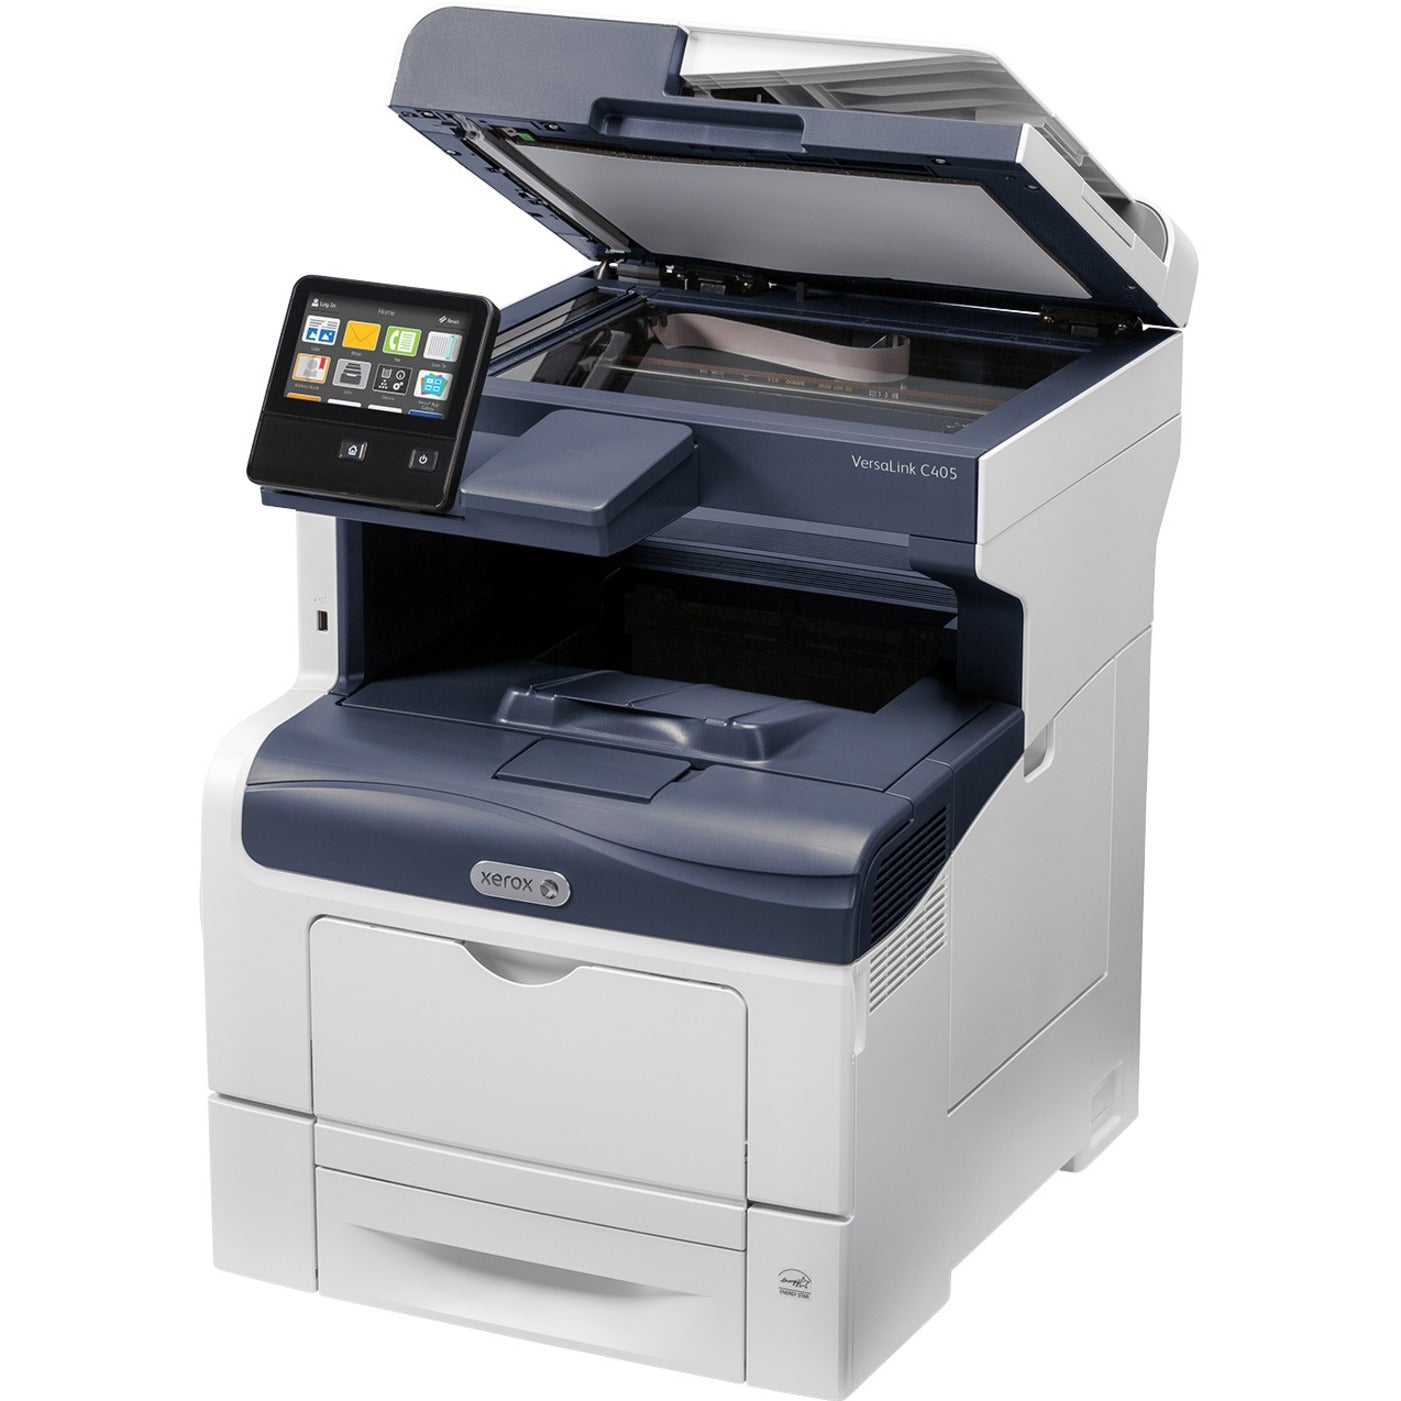 Xerox VersaLink C405 Color Laser Multifunction Printer [Discontinued]